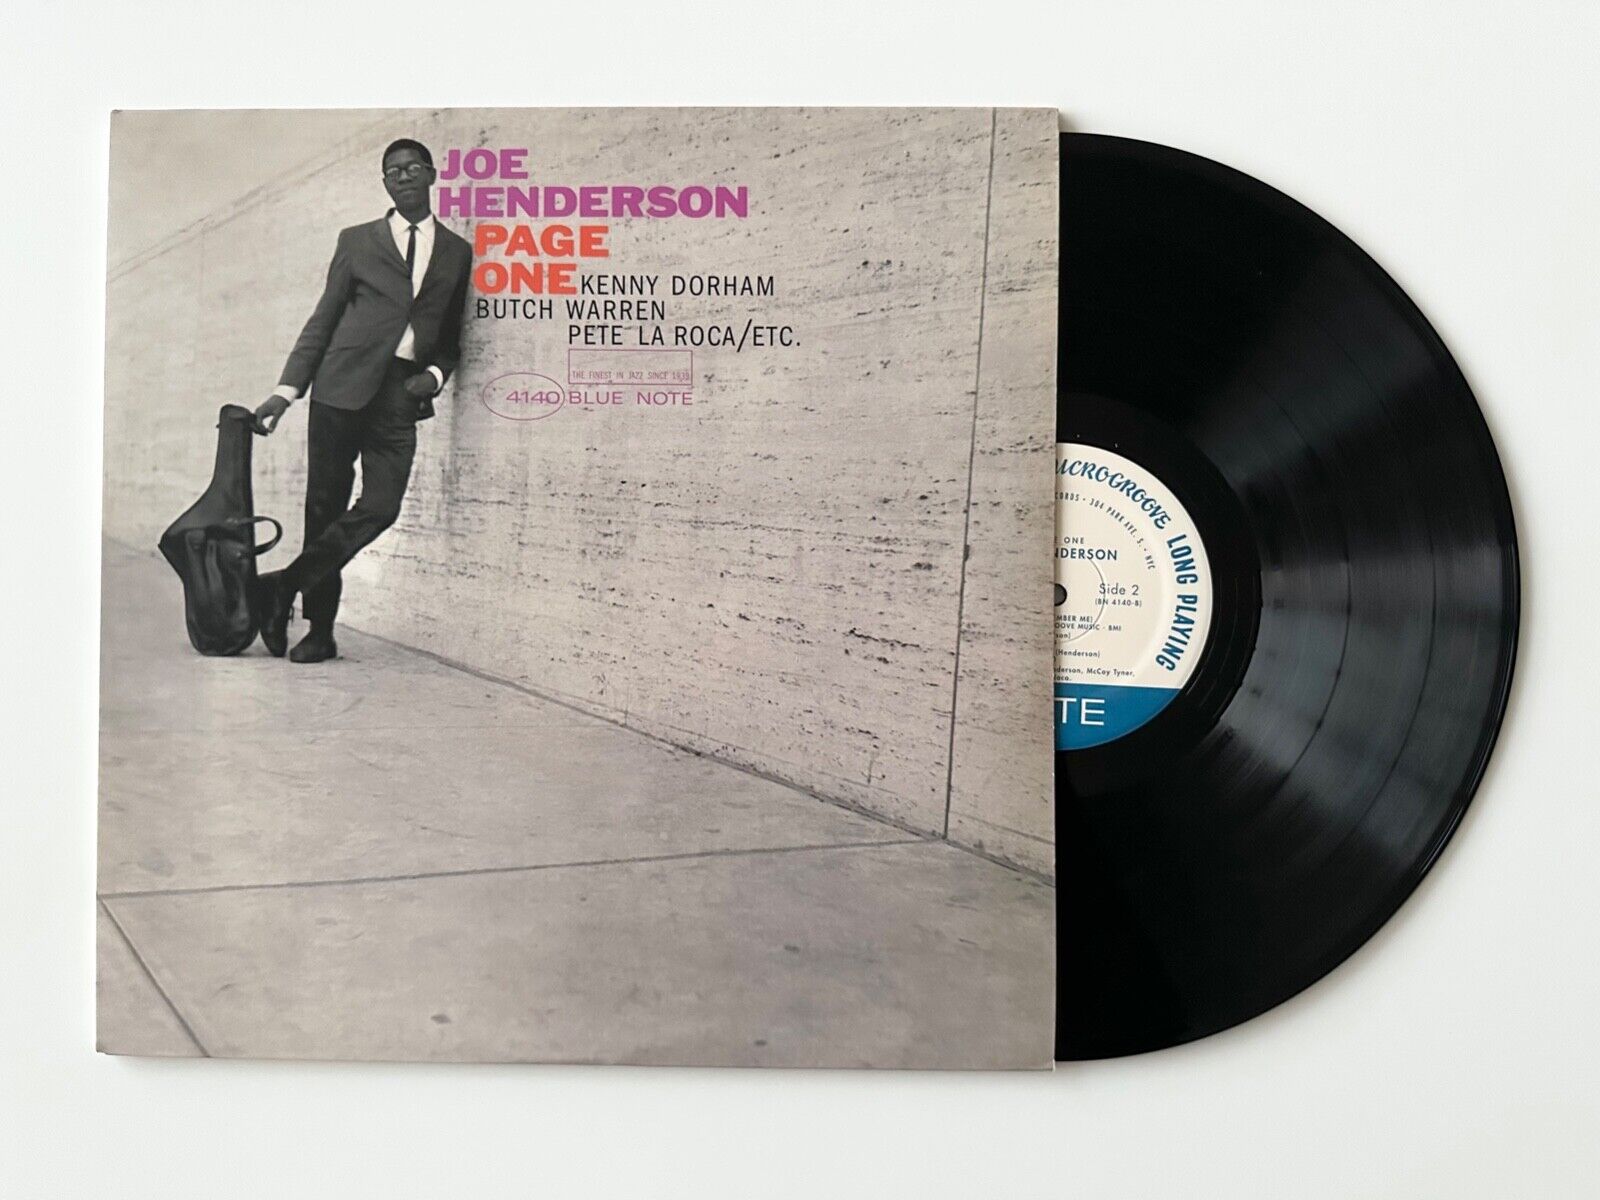 JOE HENDERSON - PAGE ONE - VINYL LP - RVG - BLUE NOTE RECORDS - BN-4140 